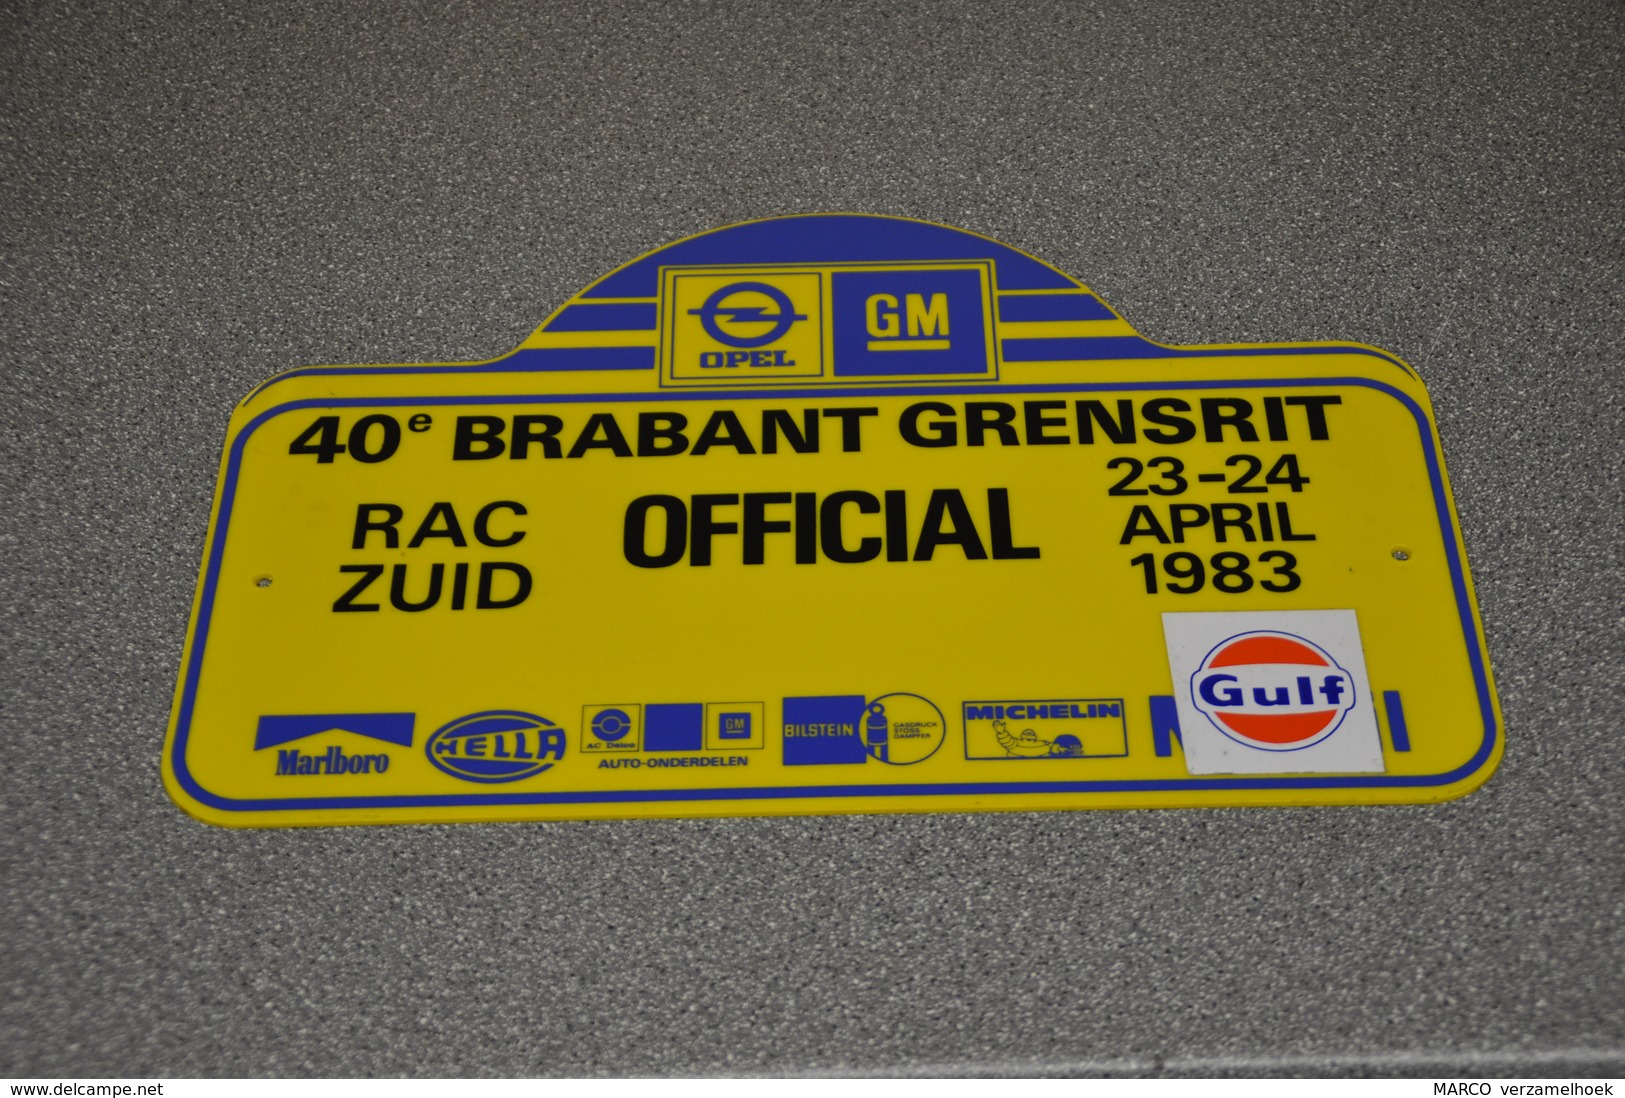 Rally Plaat-rallye Plaque Plastic: 40e Brabant-grensrit OFFICIAL 1983 RAC-zuid Opel-GM-marlboro-hella-michelin-gulf - Rally-affiches